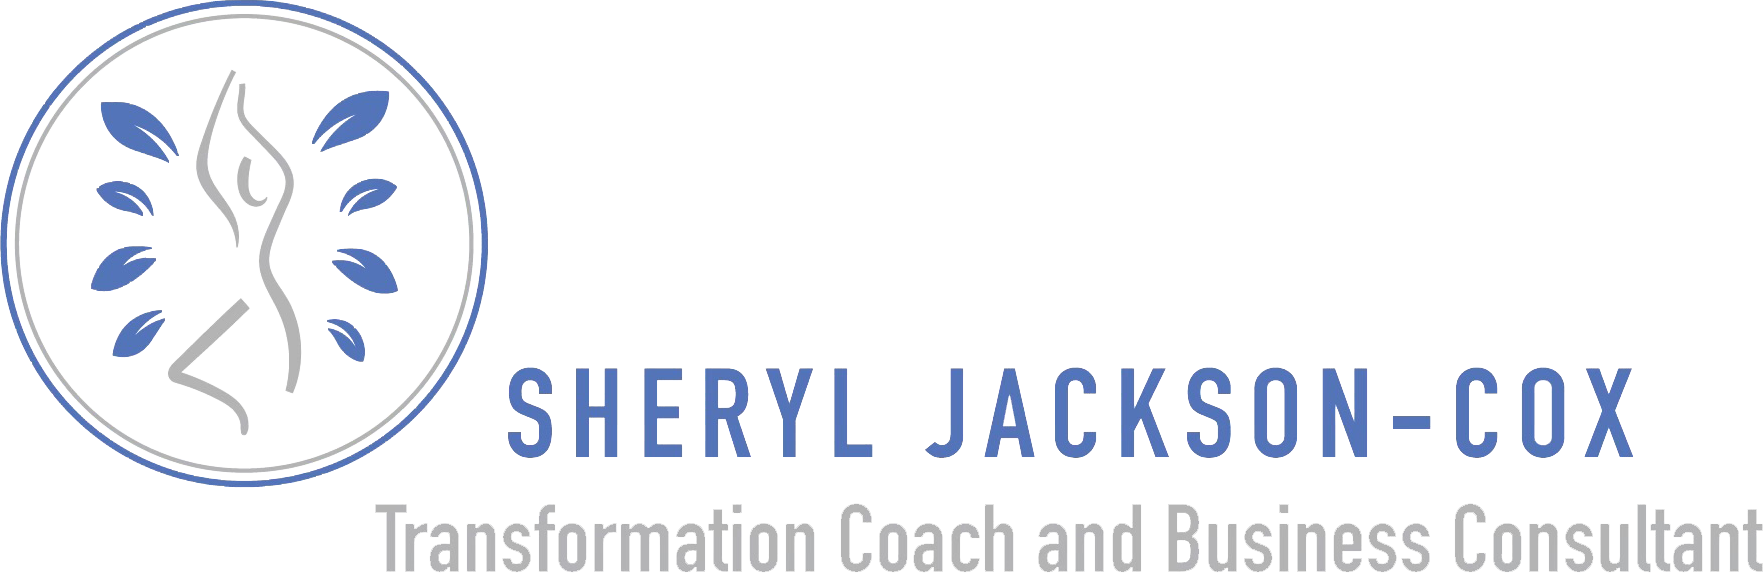 Sheryl Jackson-Cox